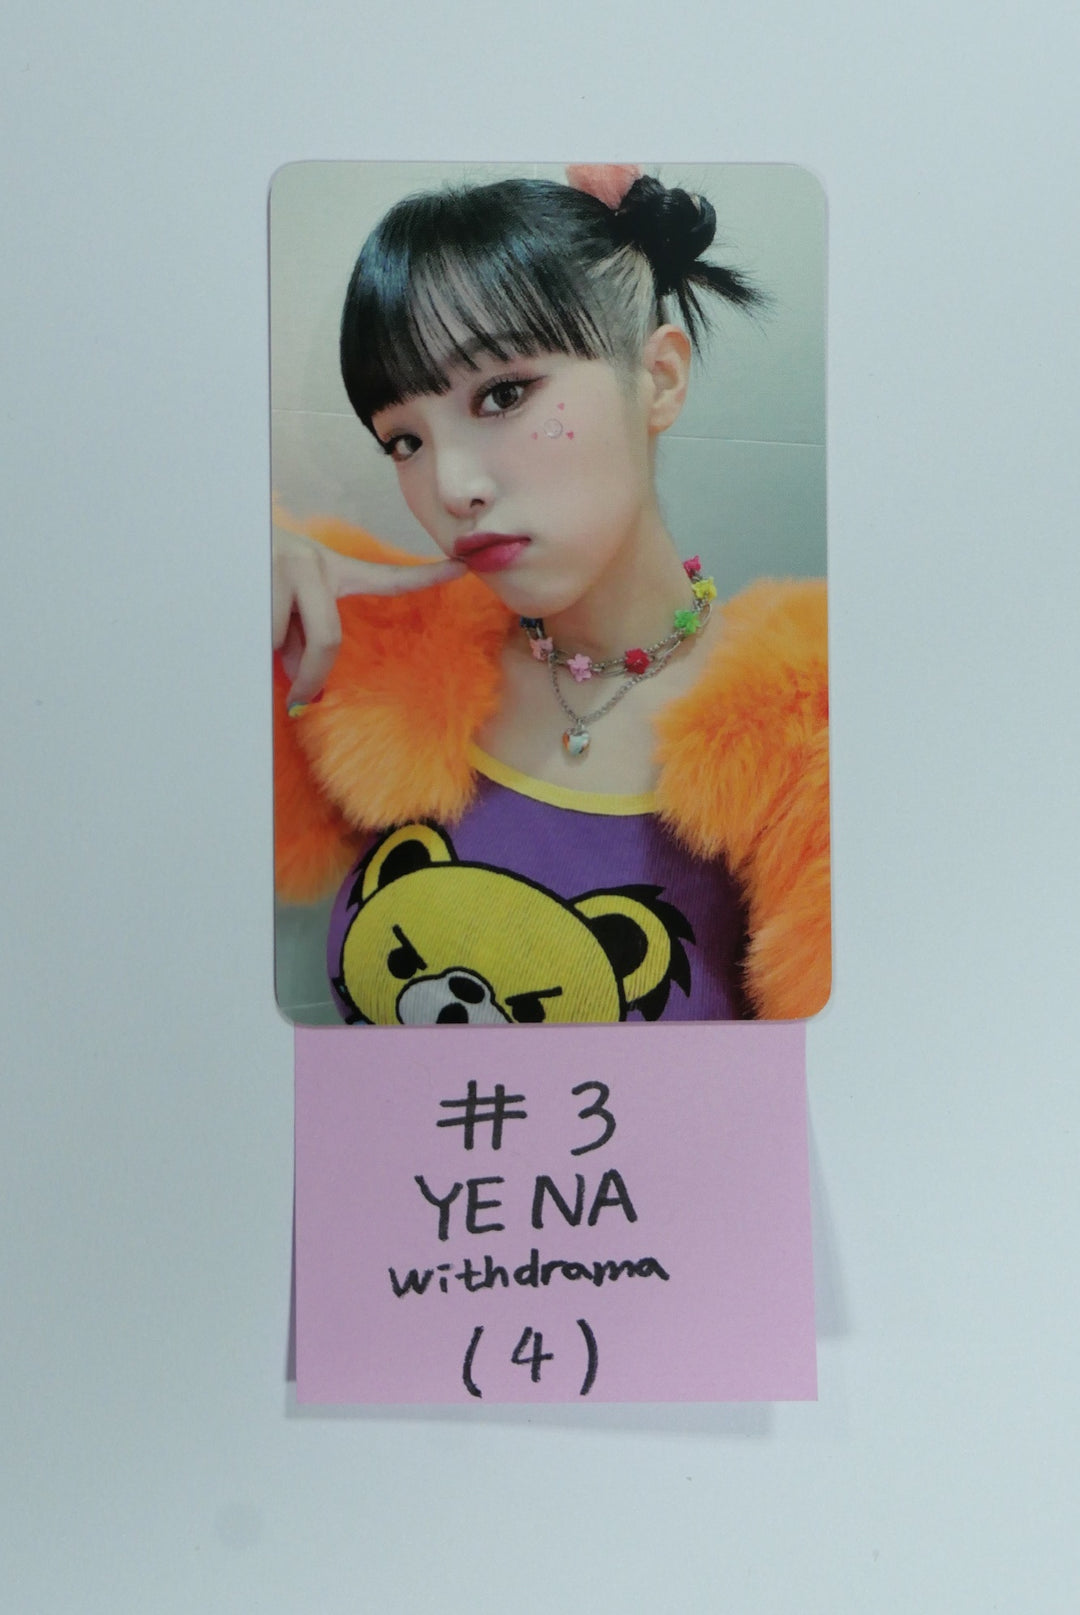 YENA "ˣ‿ˣ (SMiLEY)" - Withdrama Offline Fansign Event Photocard